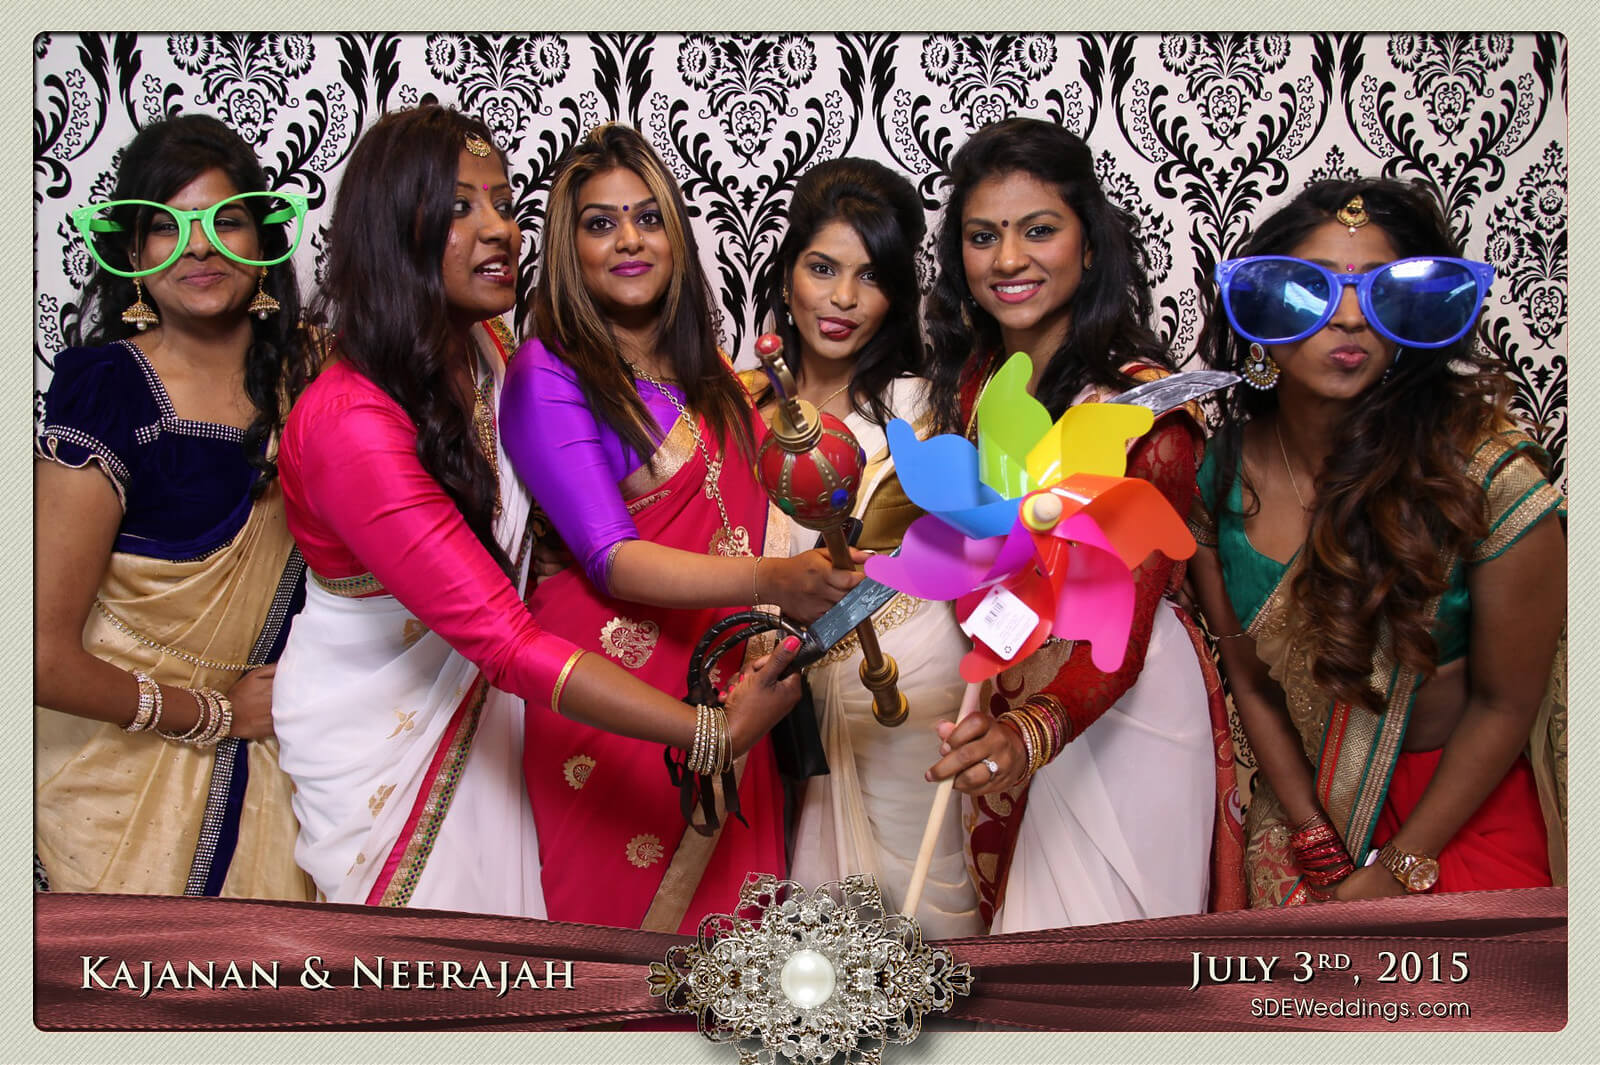 Toronto Scarborough Convention Centre Hindu Wedding Photo Booth Rental 6